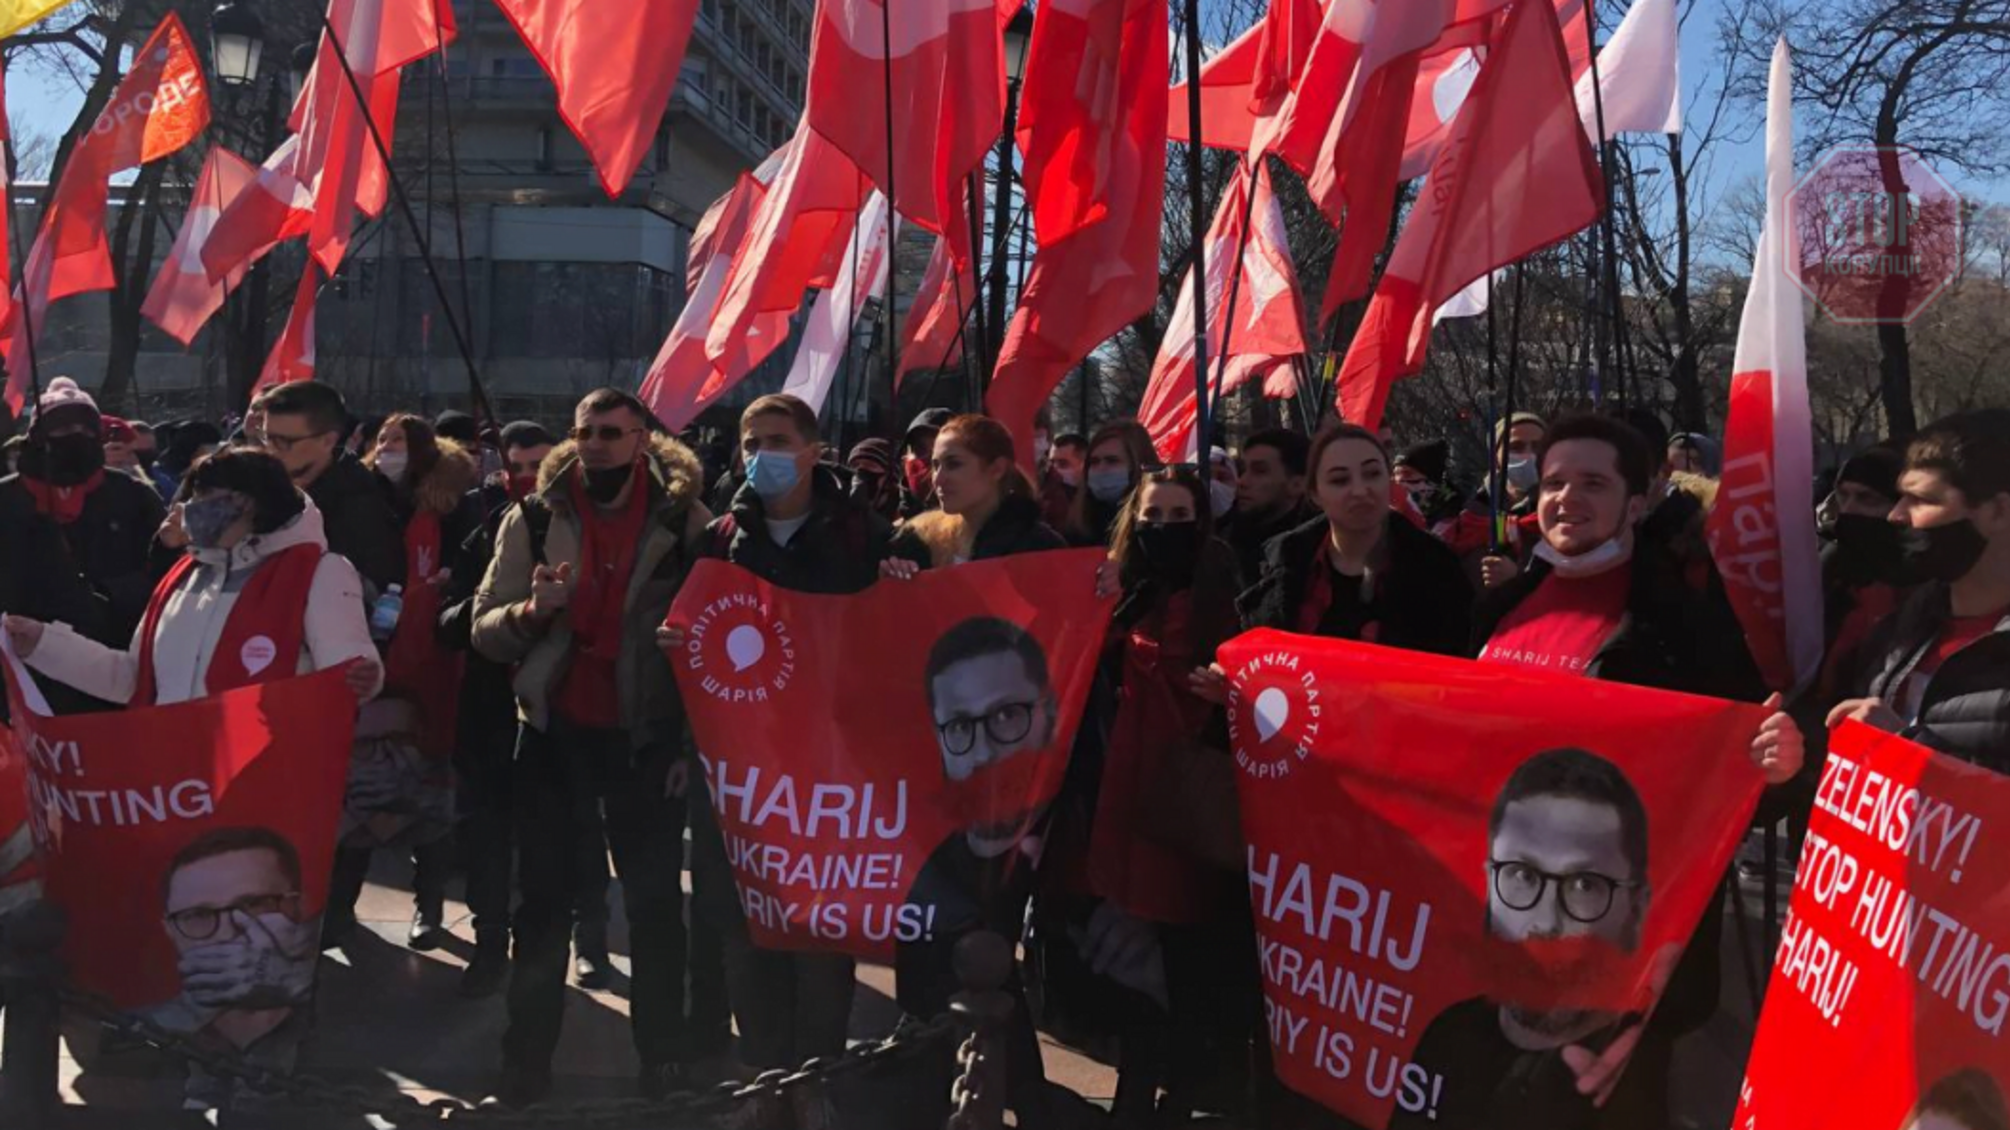 В Киеве началась акция протеста против запрета «партии Шария» (видео)